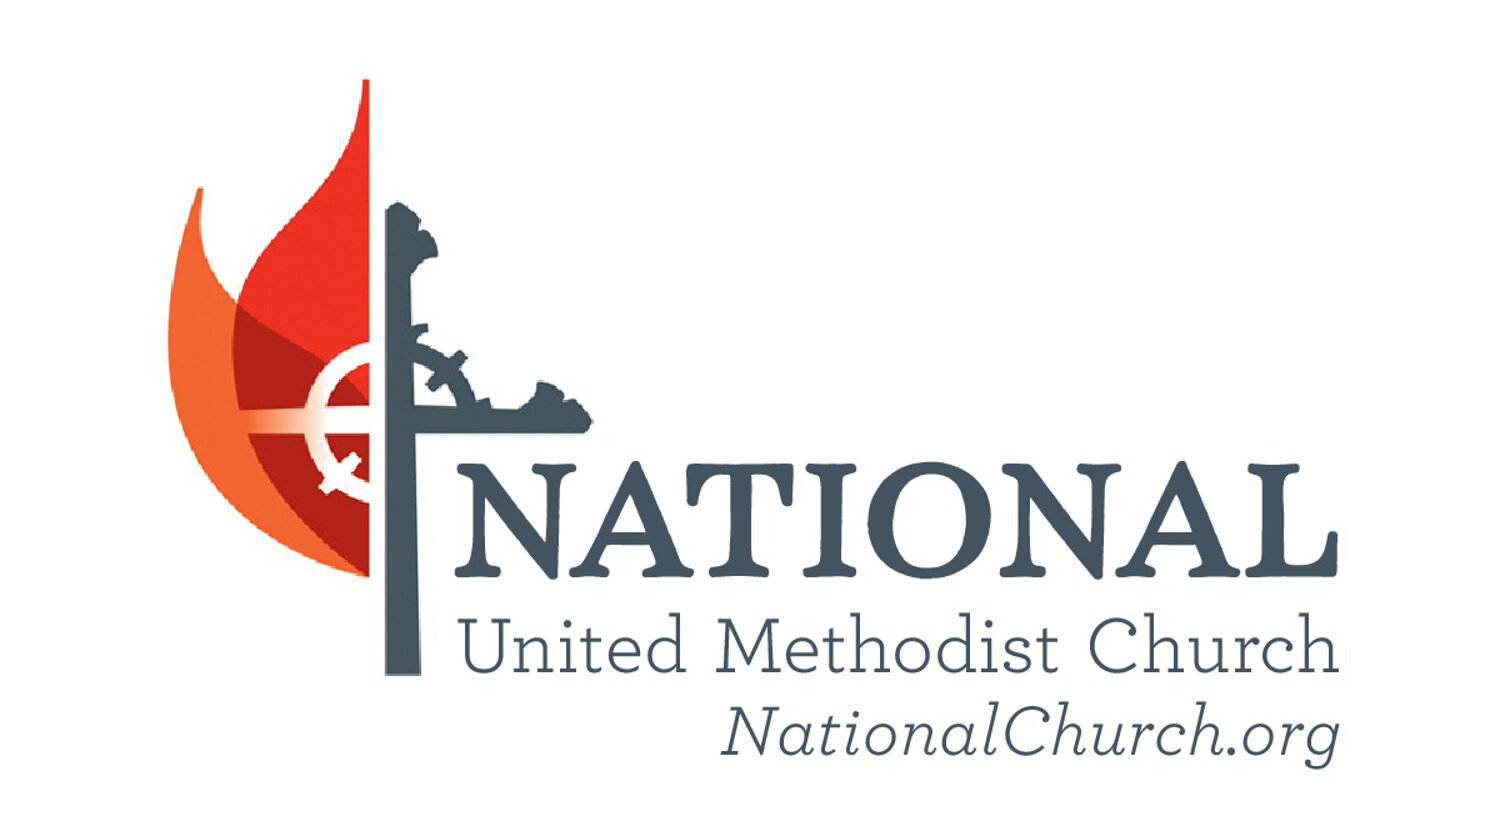 National+United+Methodist+Church+logo.jpg